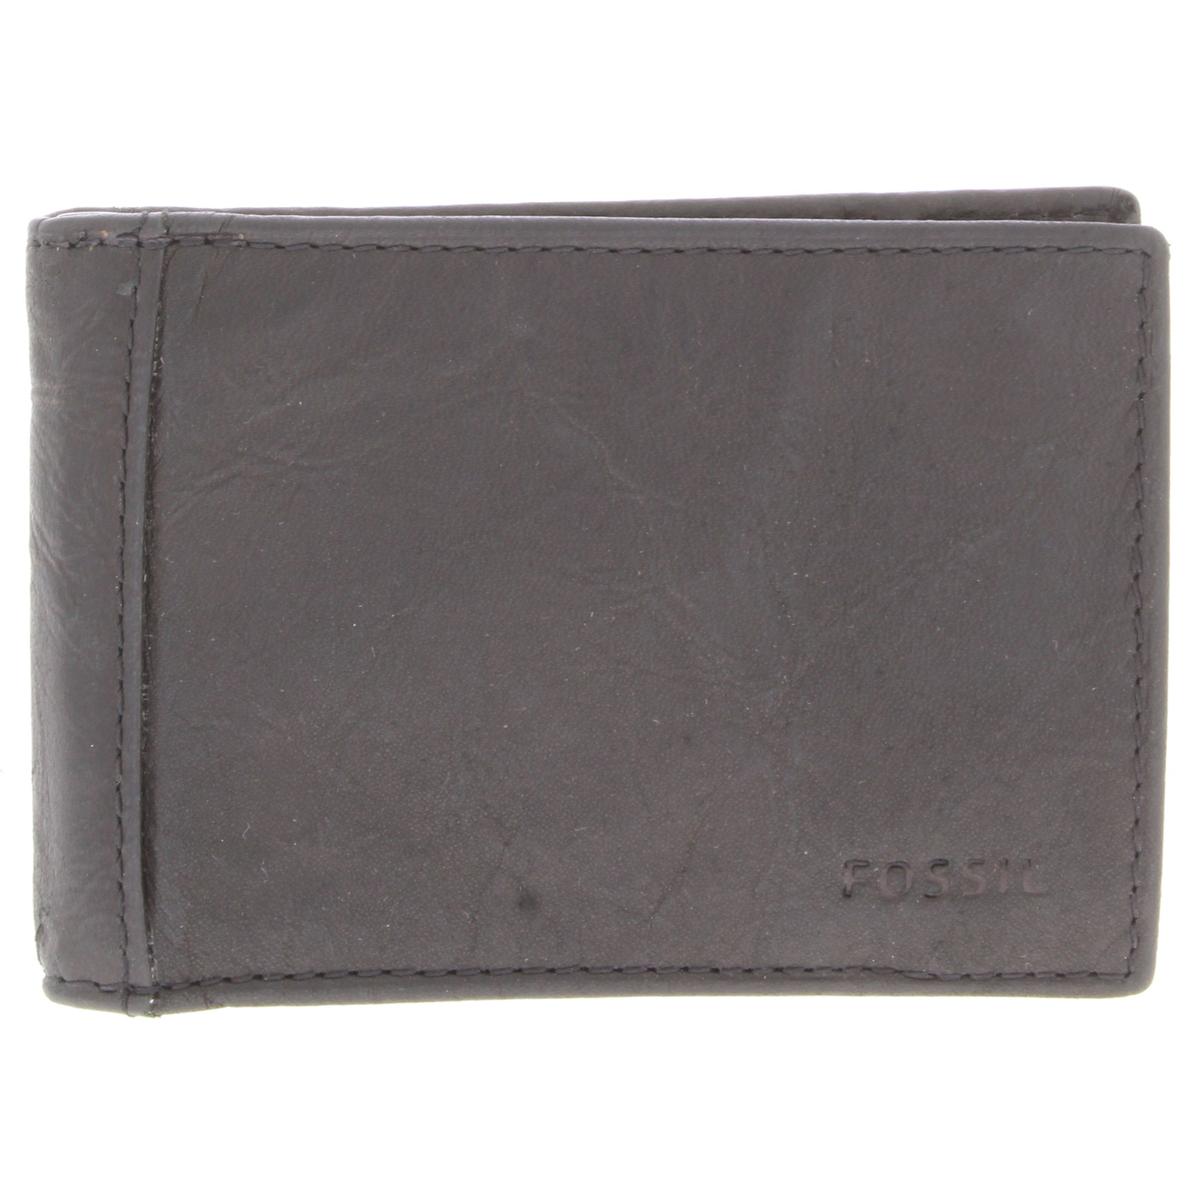 Fossil Mens Neel Black Leather Money Clip Billfold Bifold Wallet O/S BHFO 2971 | eBay